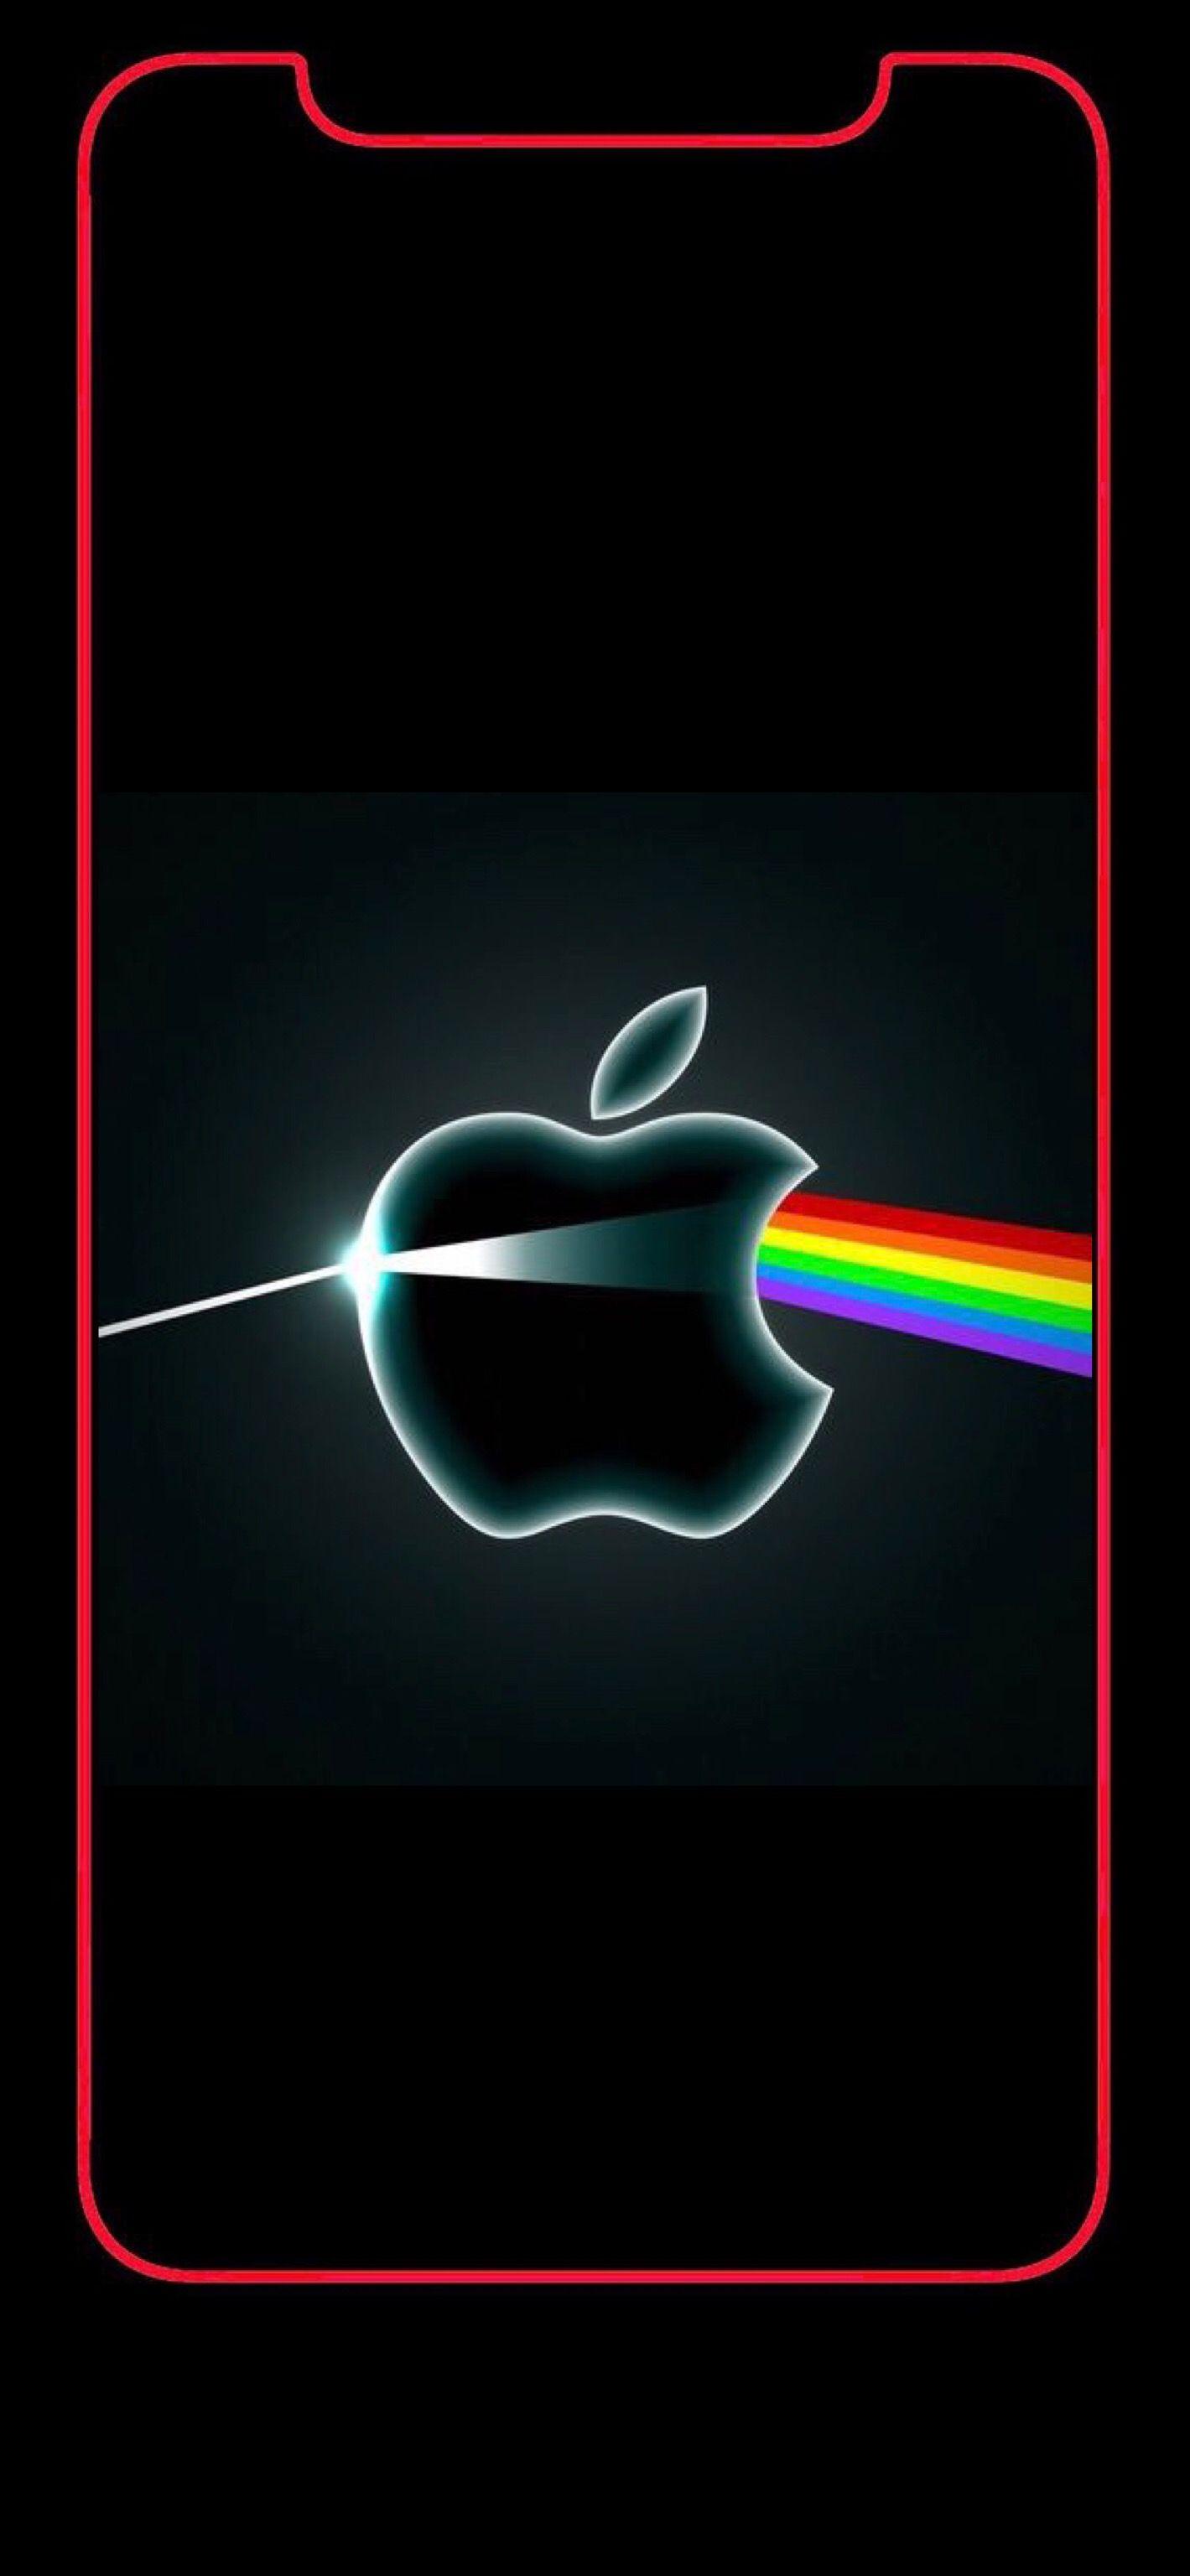 Wallpaper iPhone X logo rainbow 3. Apple wallpaper, Apple wallpaper iphone, iPhone wallpaper